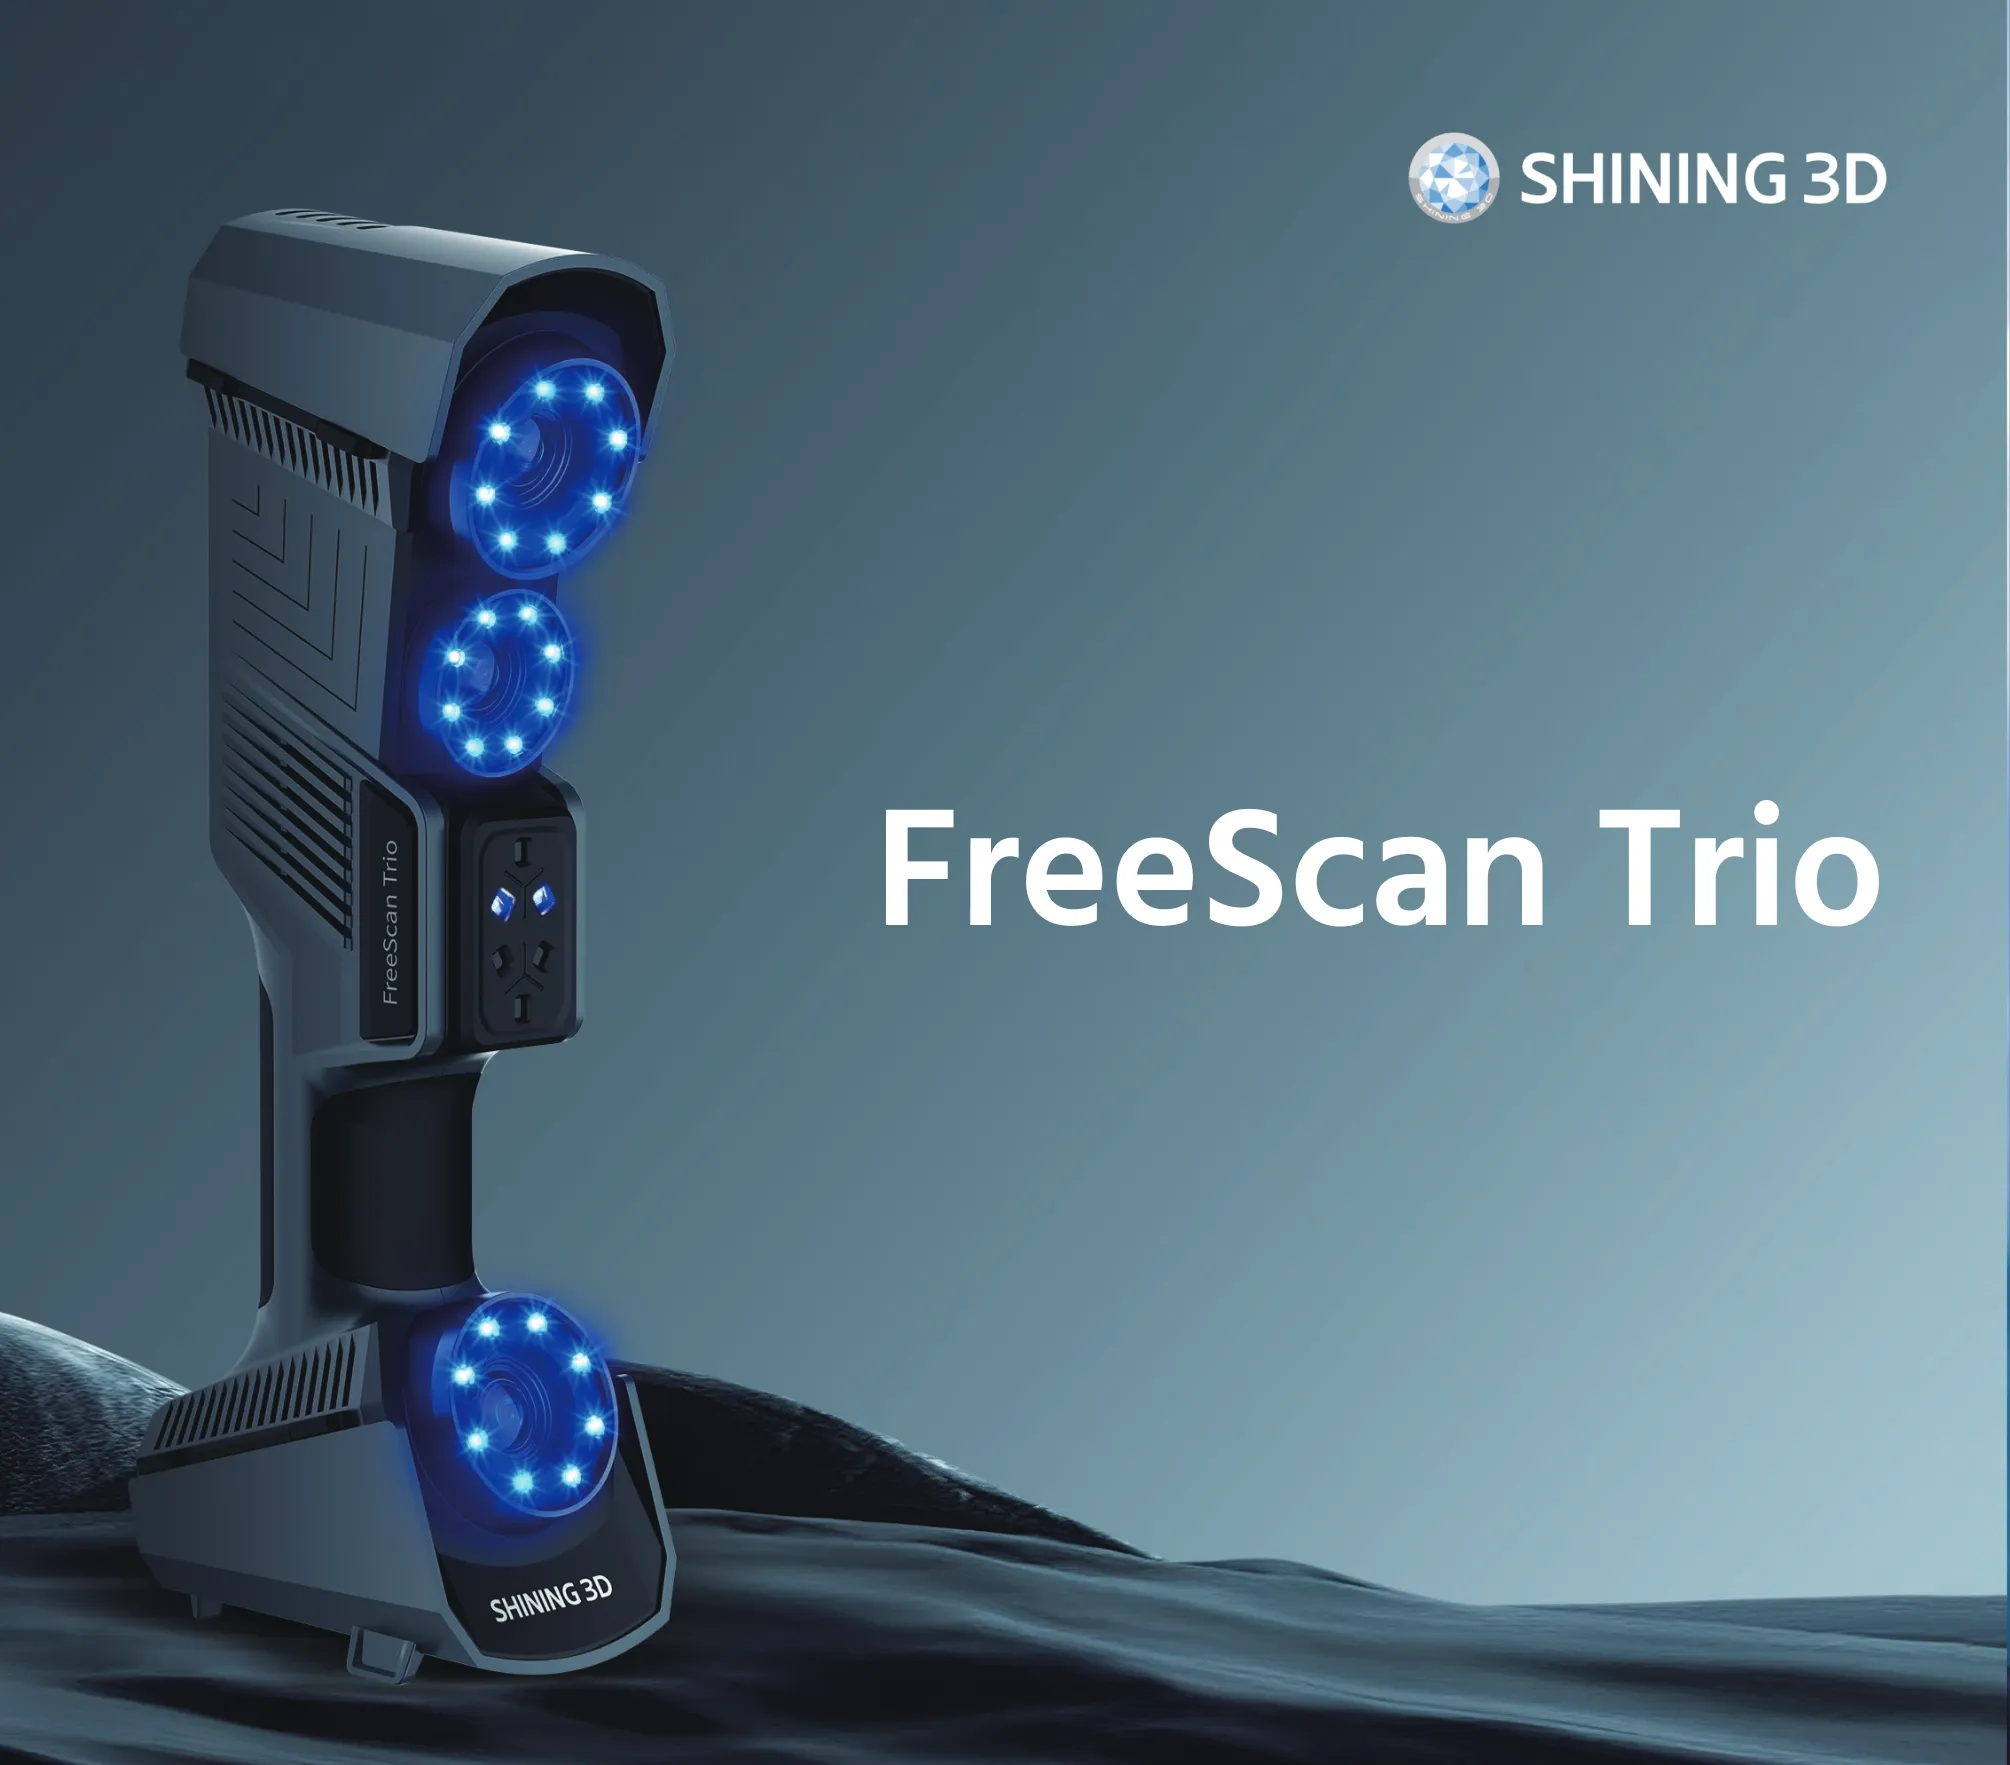 Shining 3D FreeScan Trio